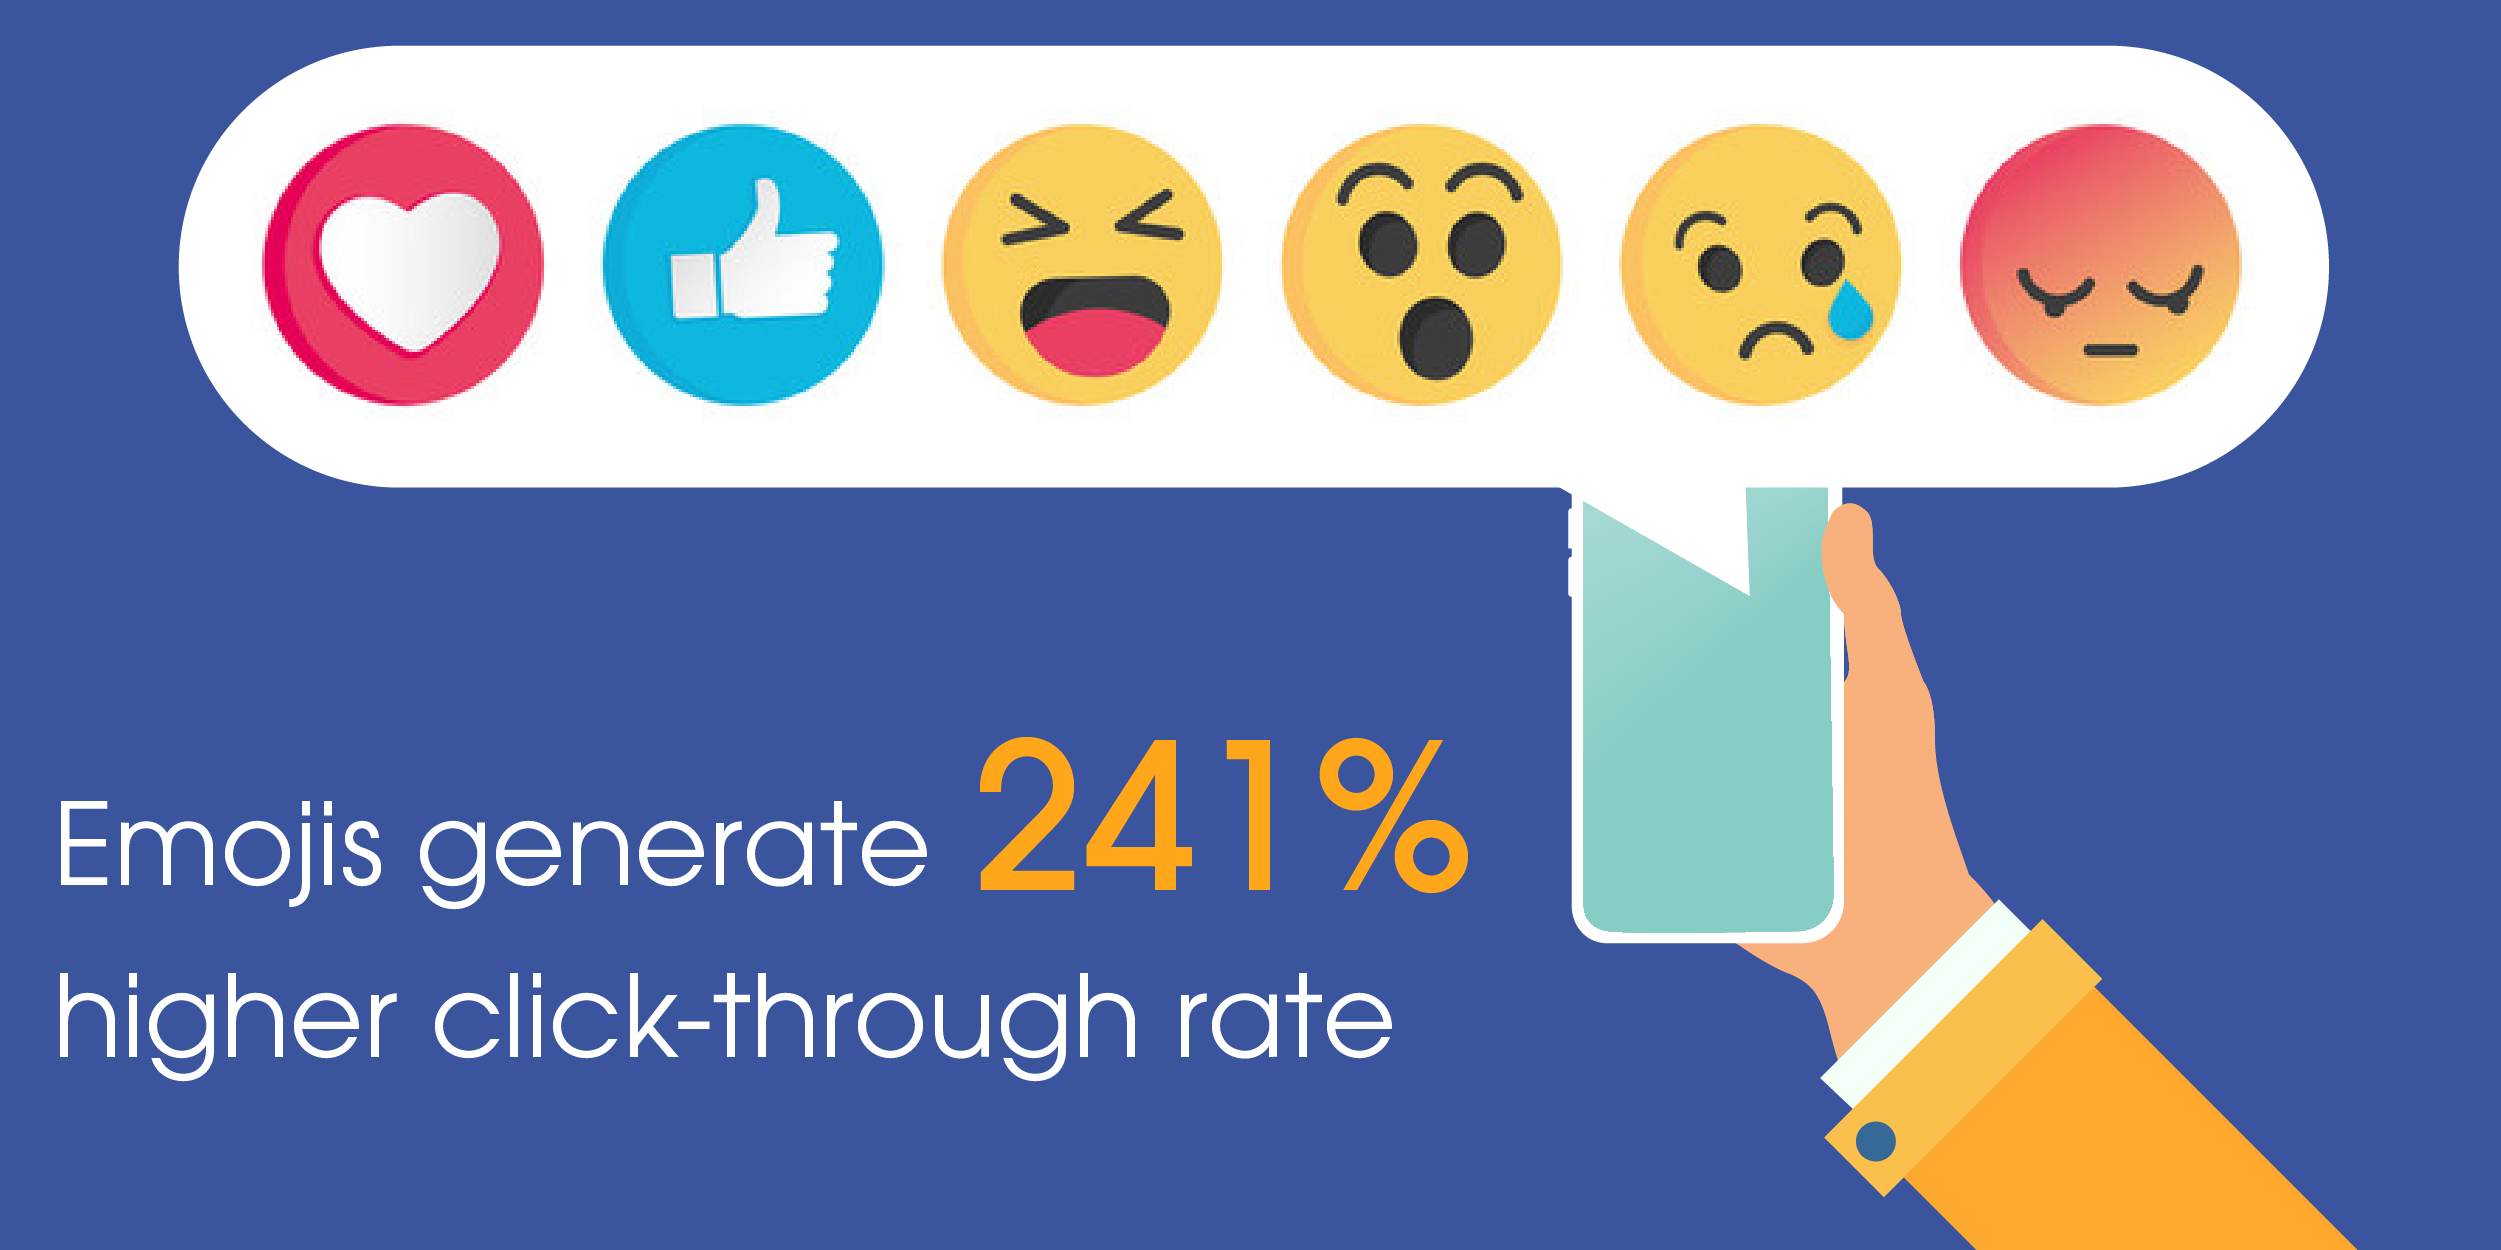 Emojis generate 241% higher click-through rate